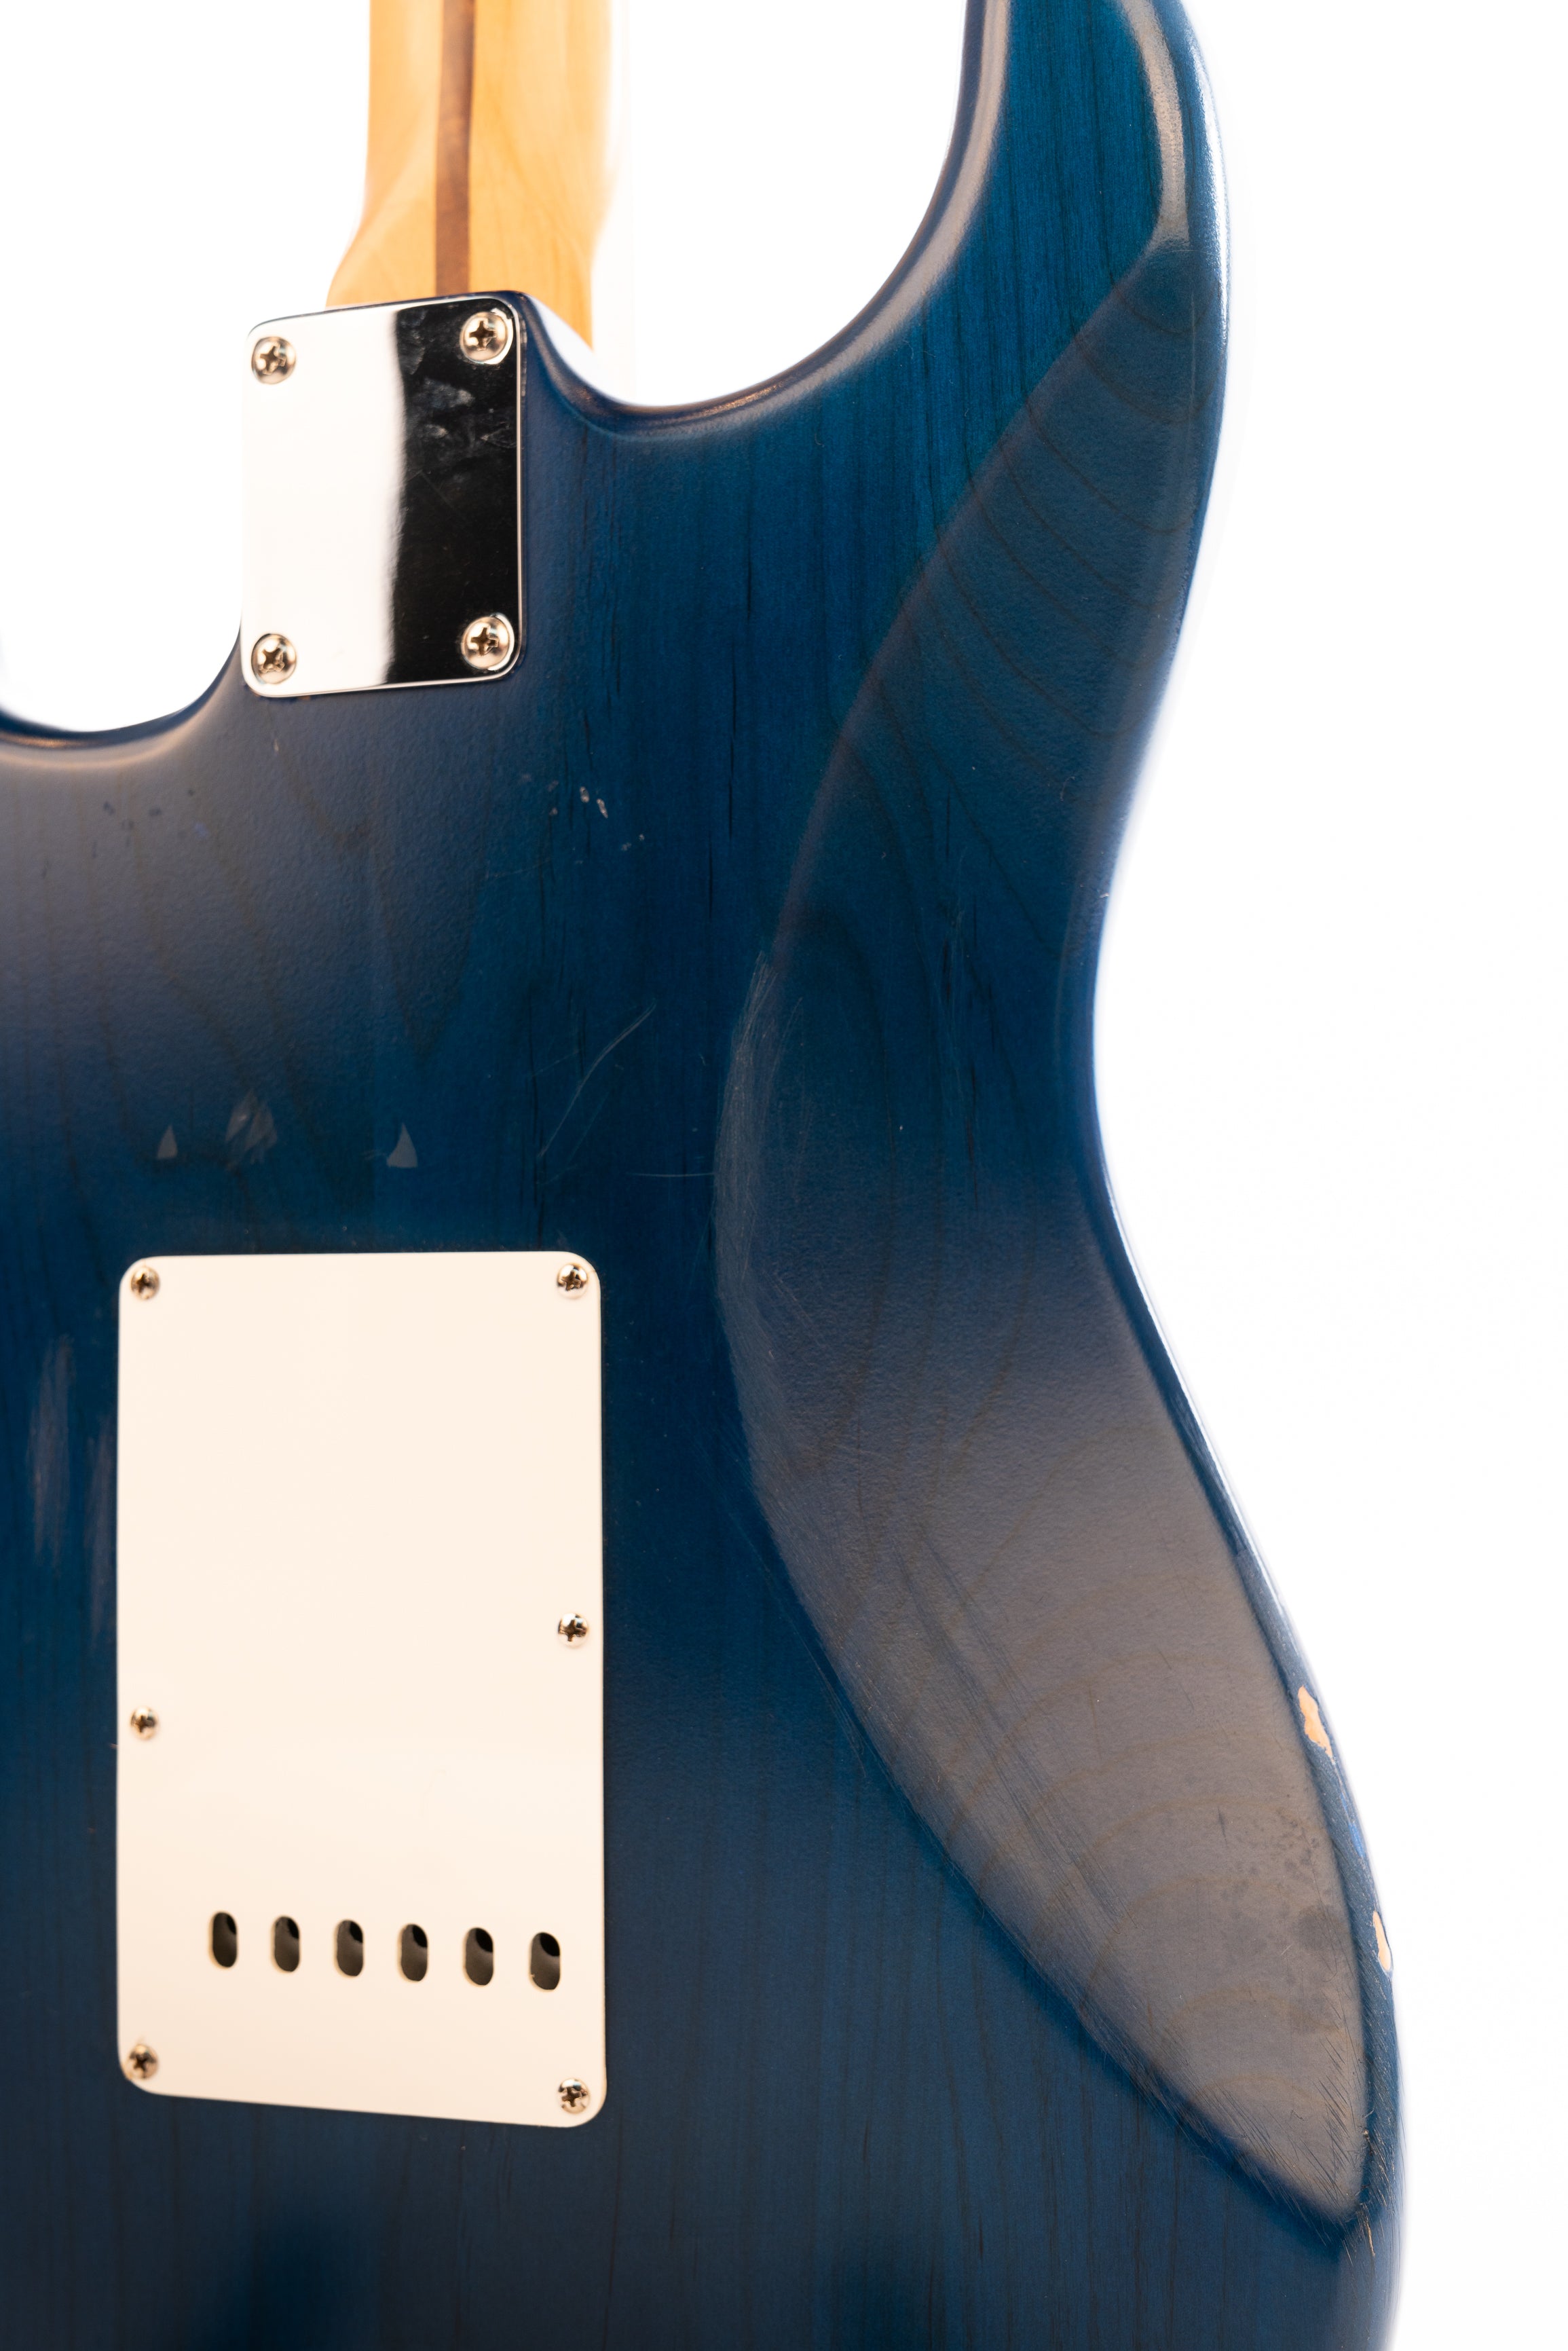 2003 Fender Highway One Stratocaster in Transparent Satin Blue